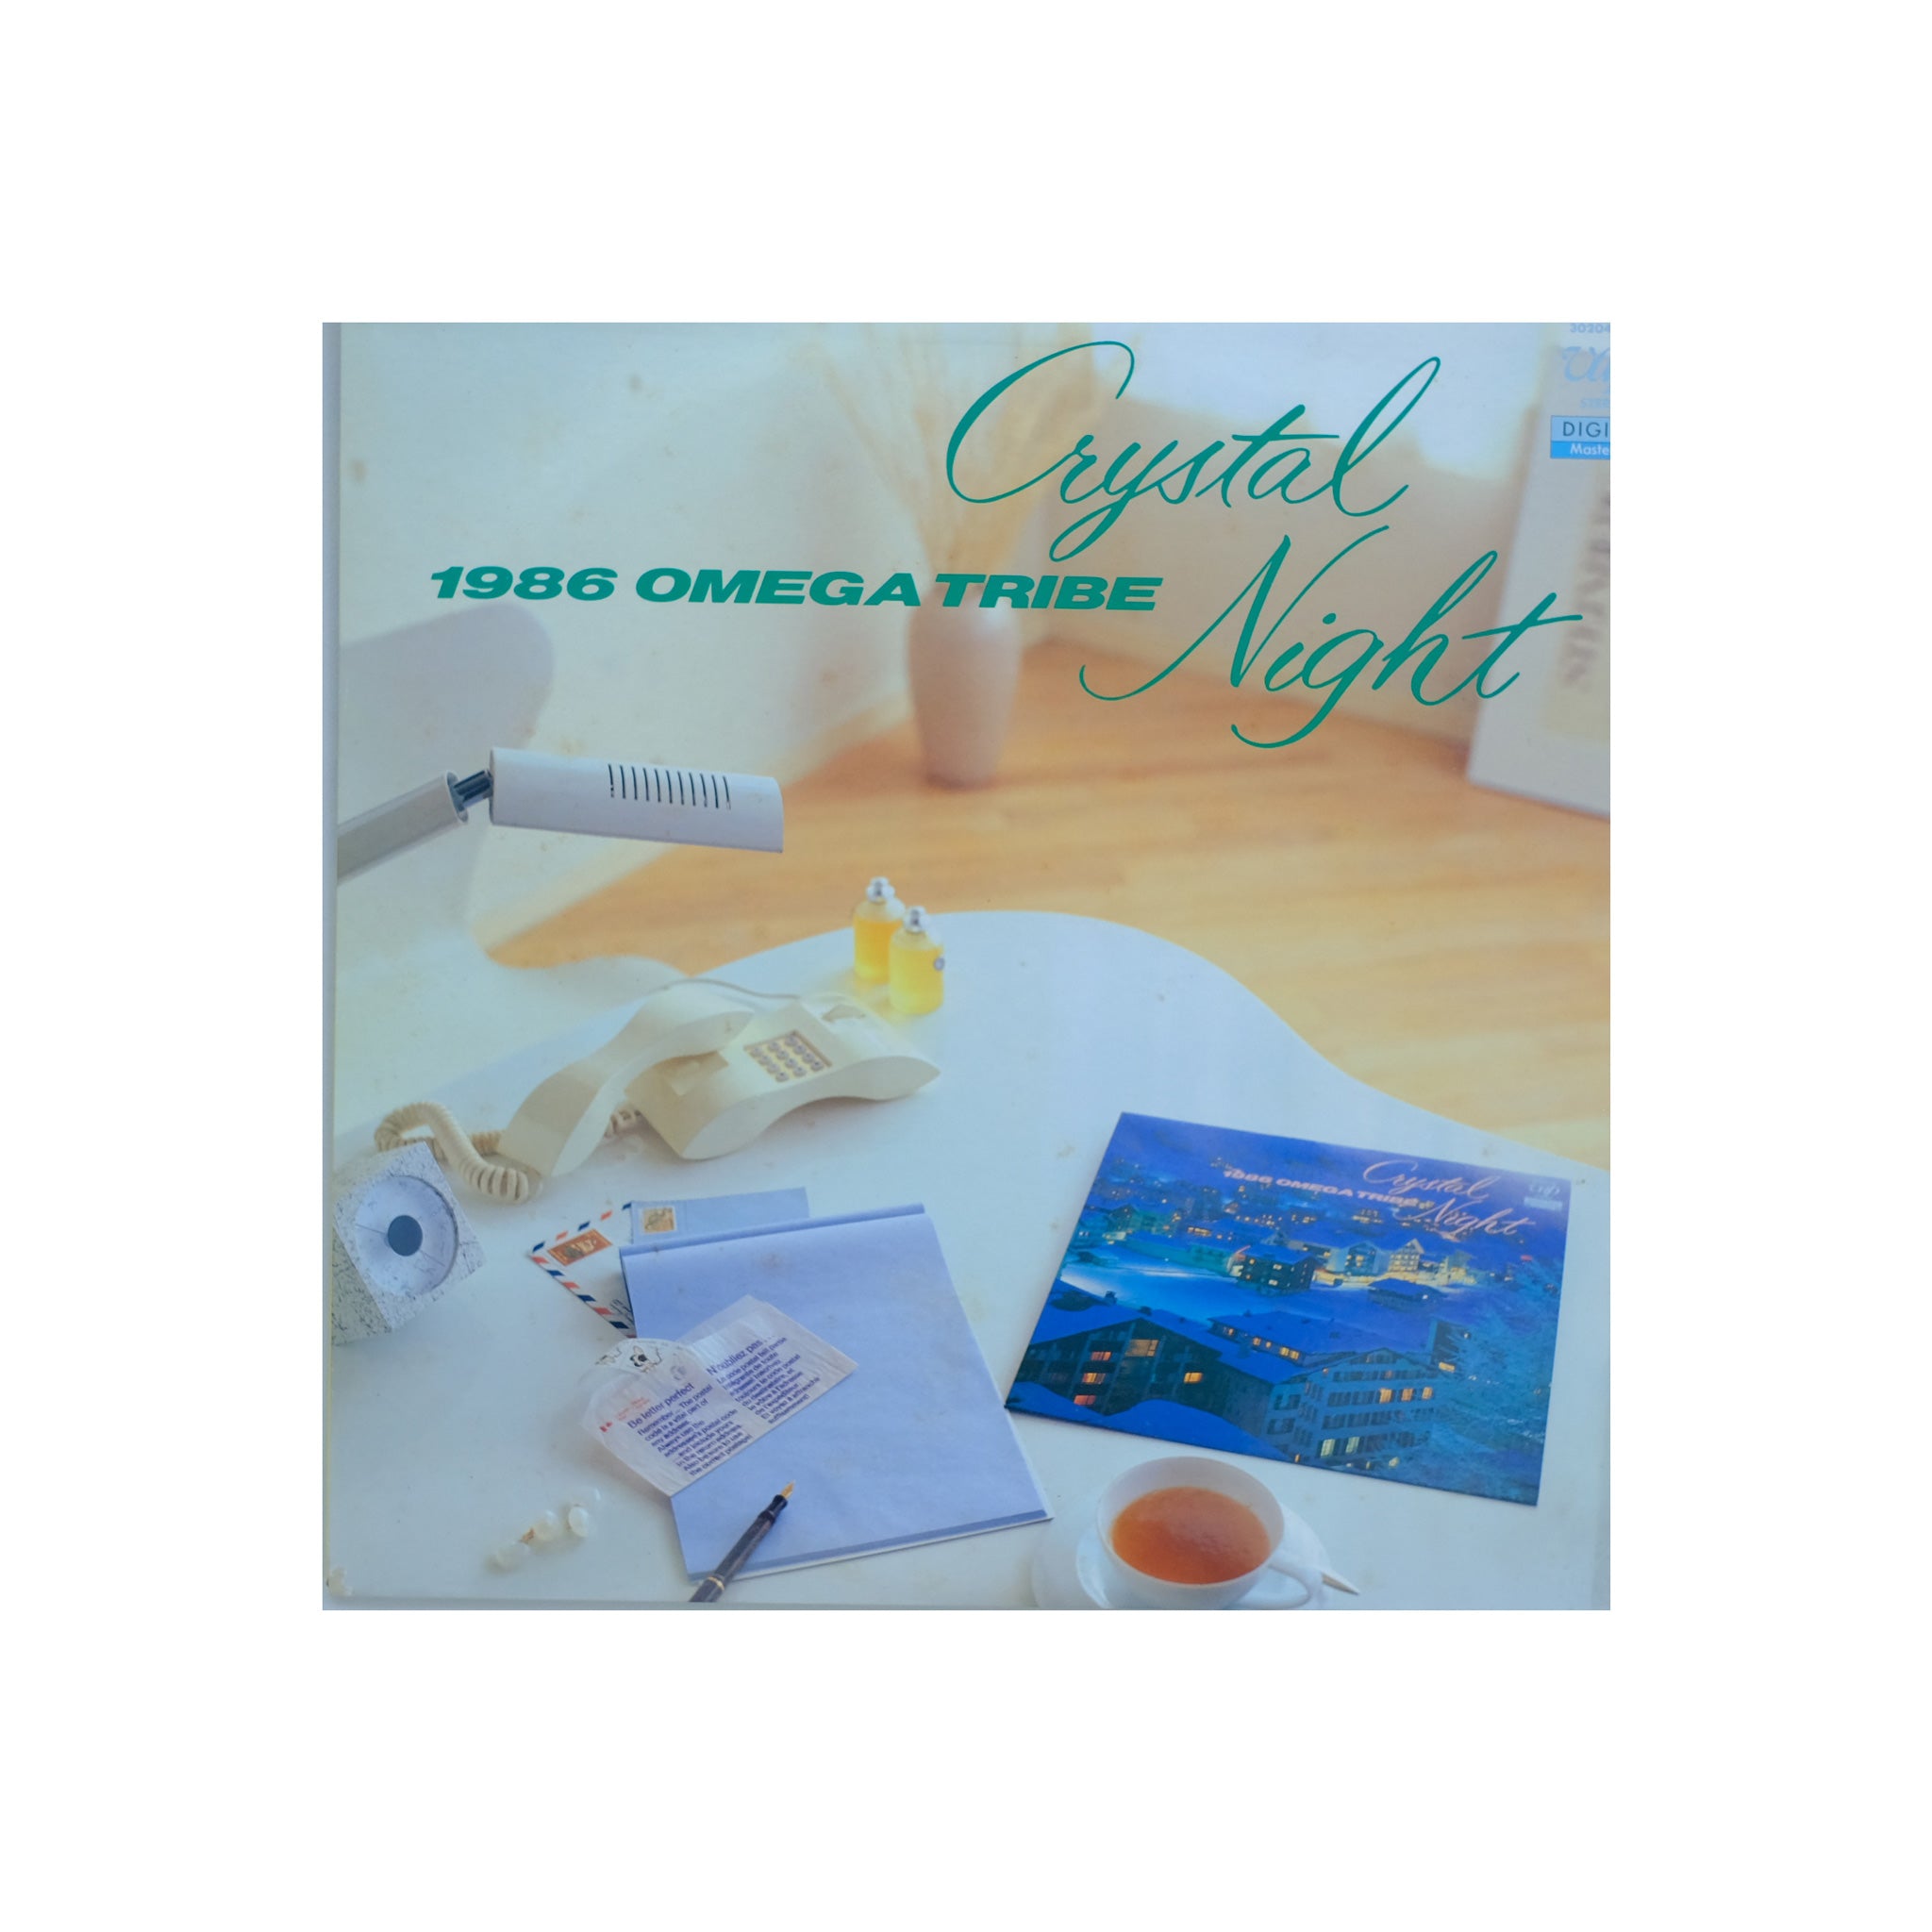 1986 Omega Tribe - Crystal Night